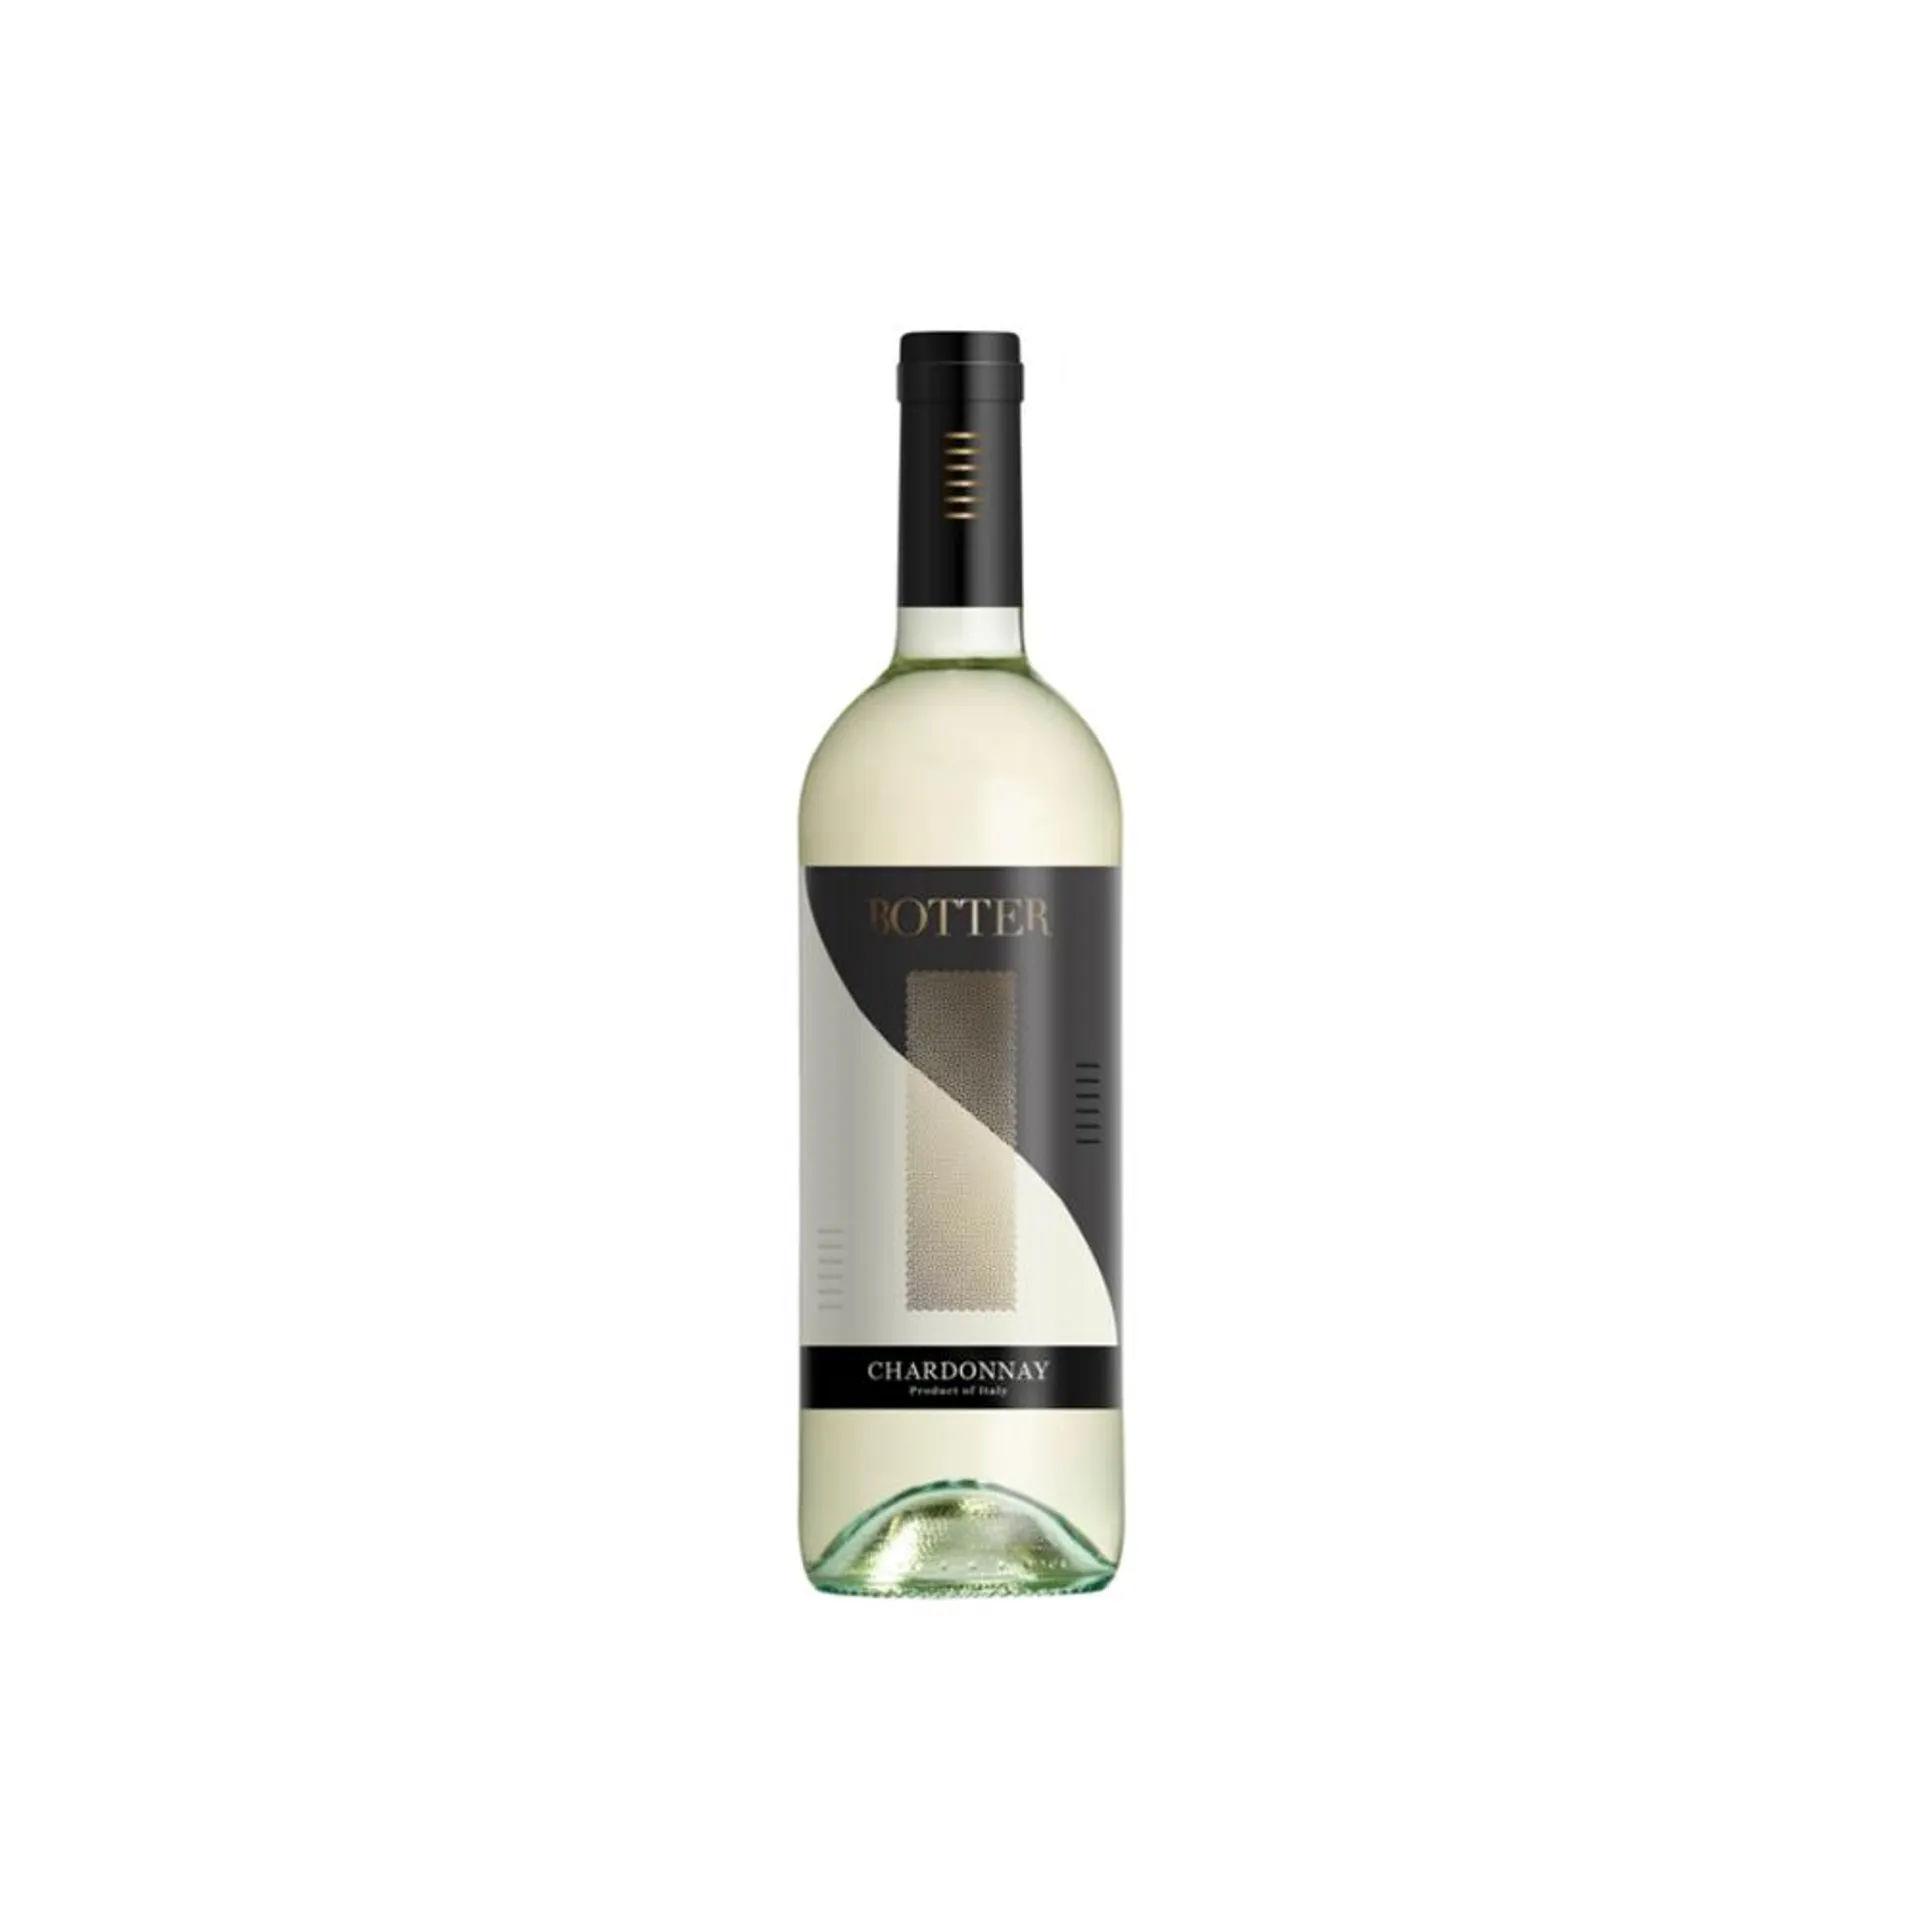 Botter Veneto Chardonnay - Italy